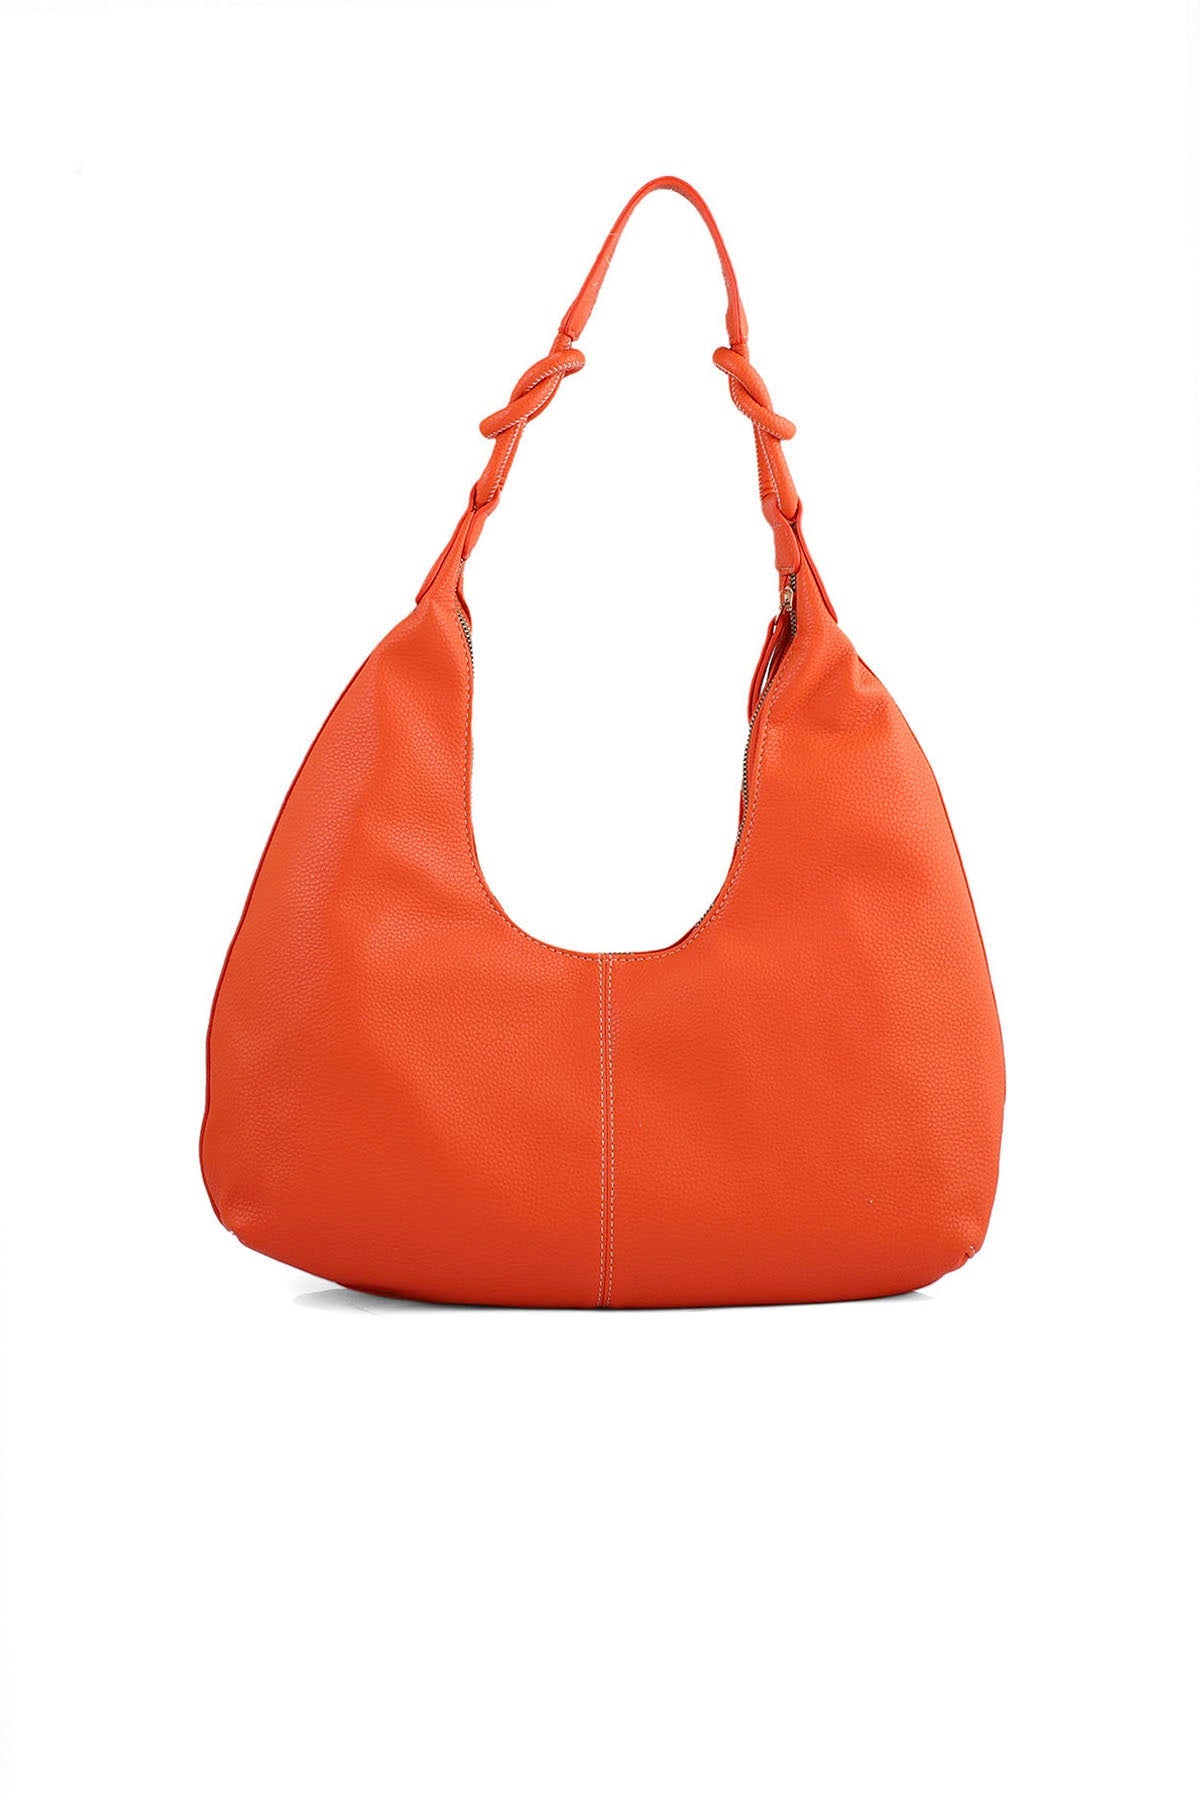 Hobo Hand Bags B15022-Orange